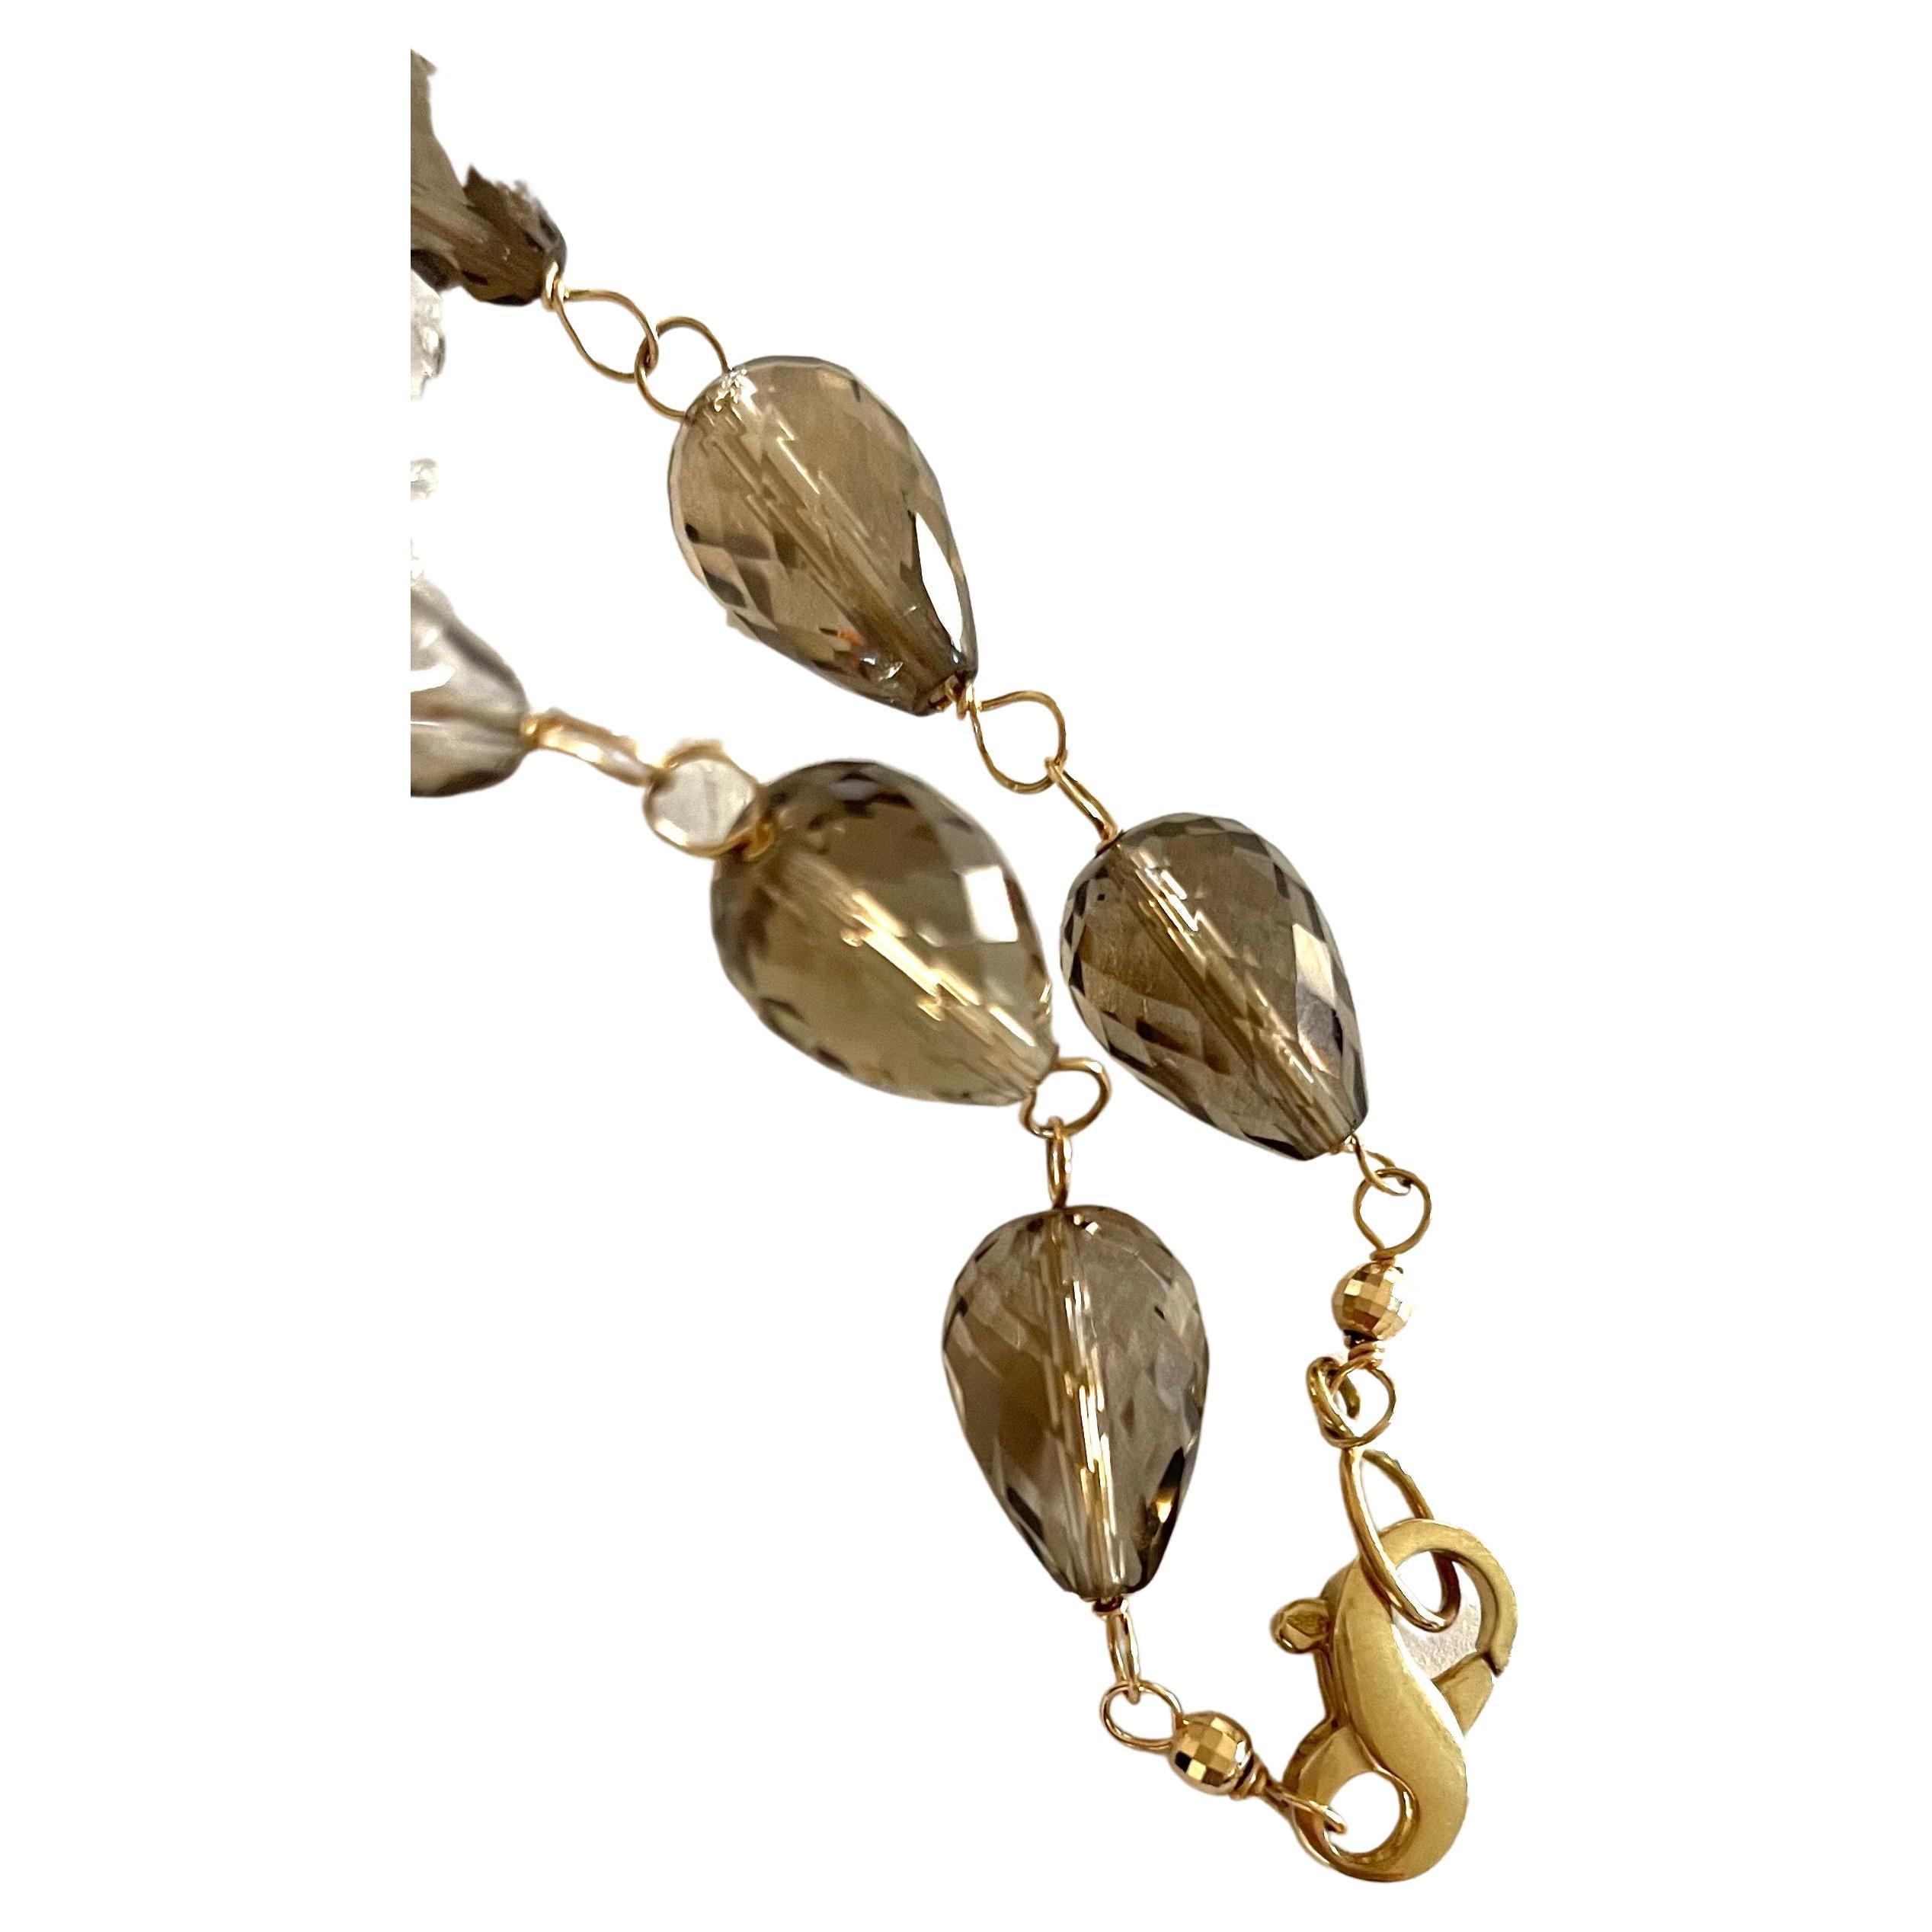 Briolette Cut Smoky Quartz Briolette Necklace with Yellow Gold Accents For Sale